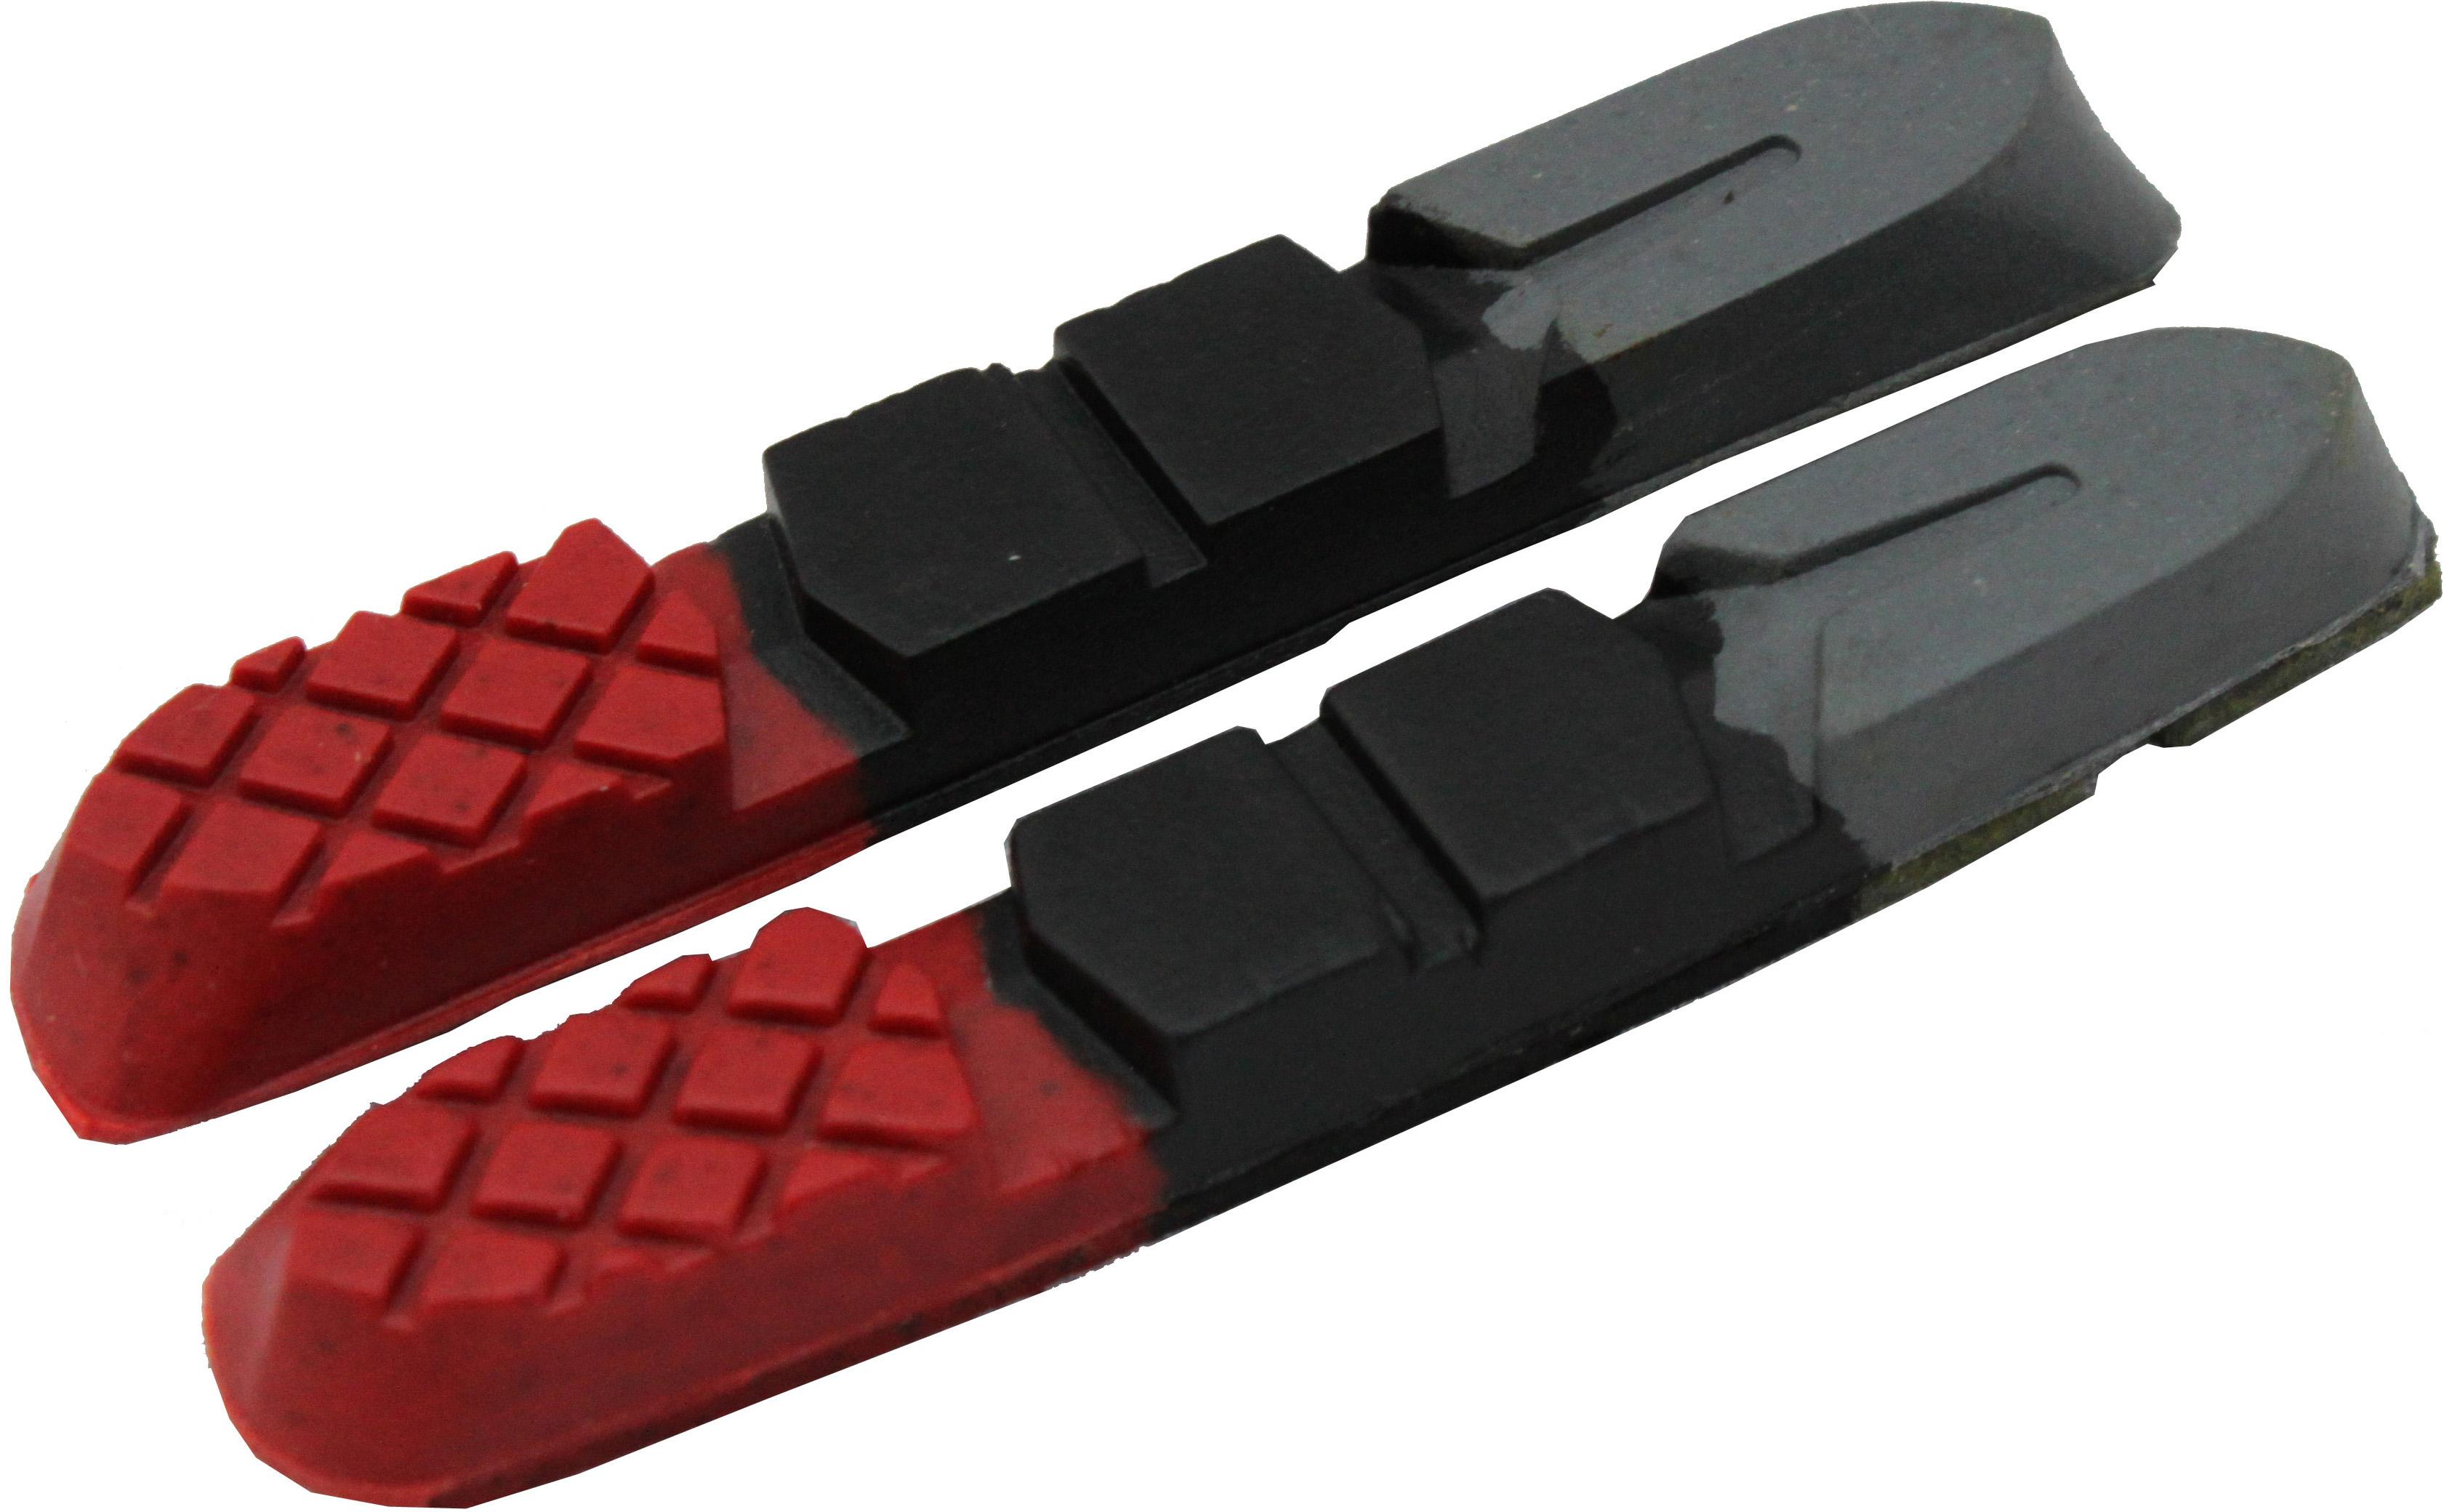 Clarks V-type Brake Pads (triple Compound) - Black/red